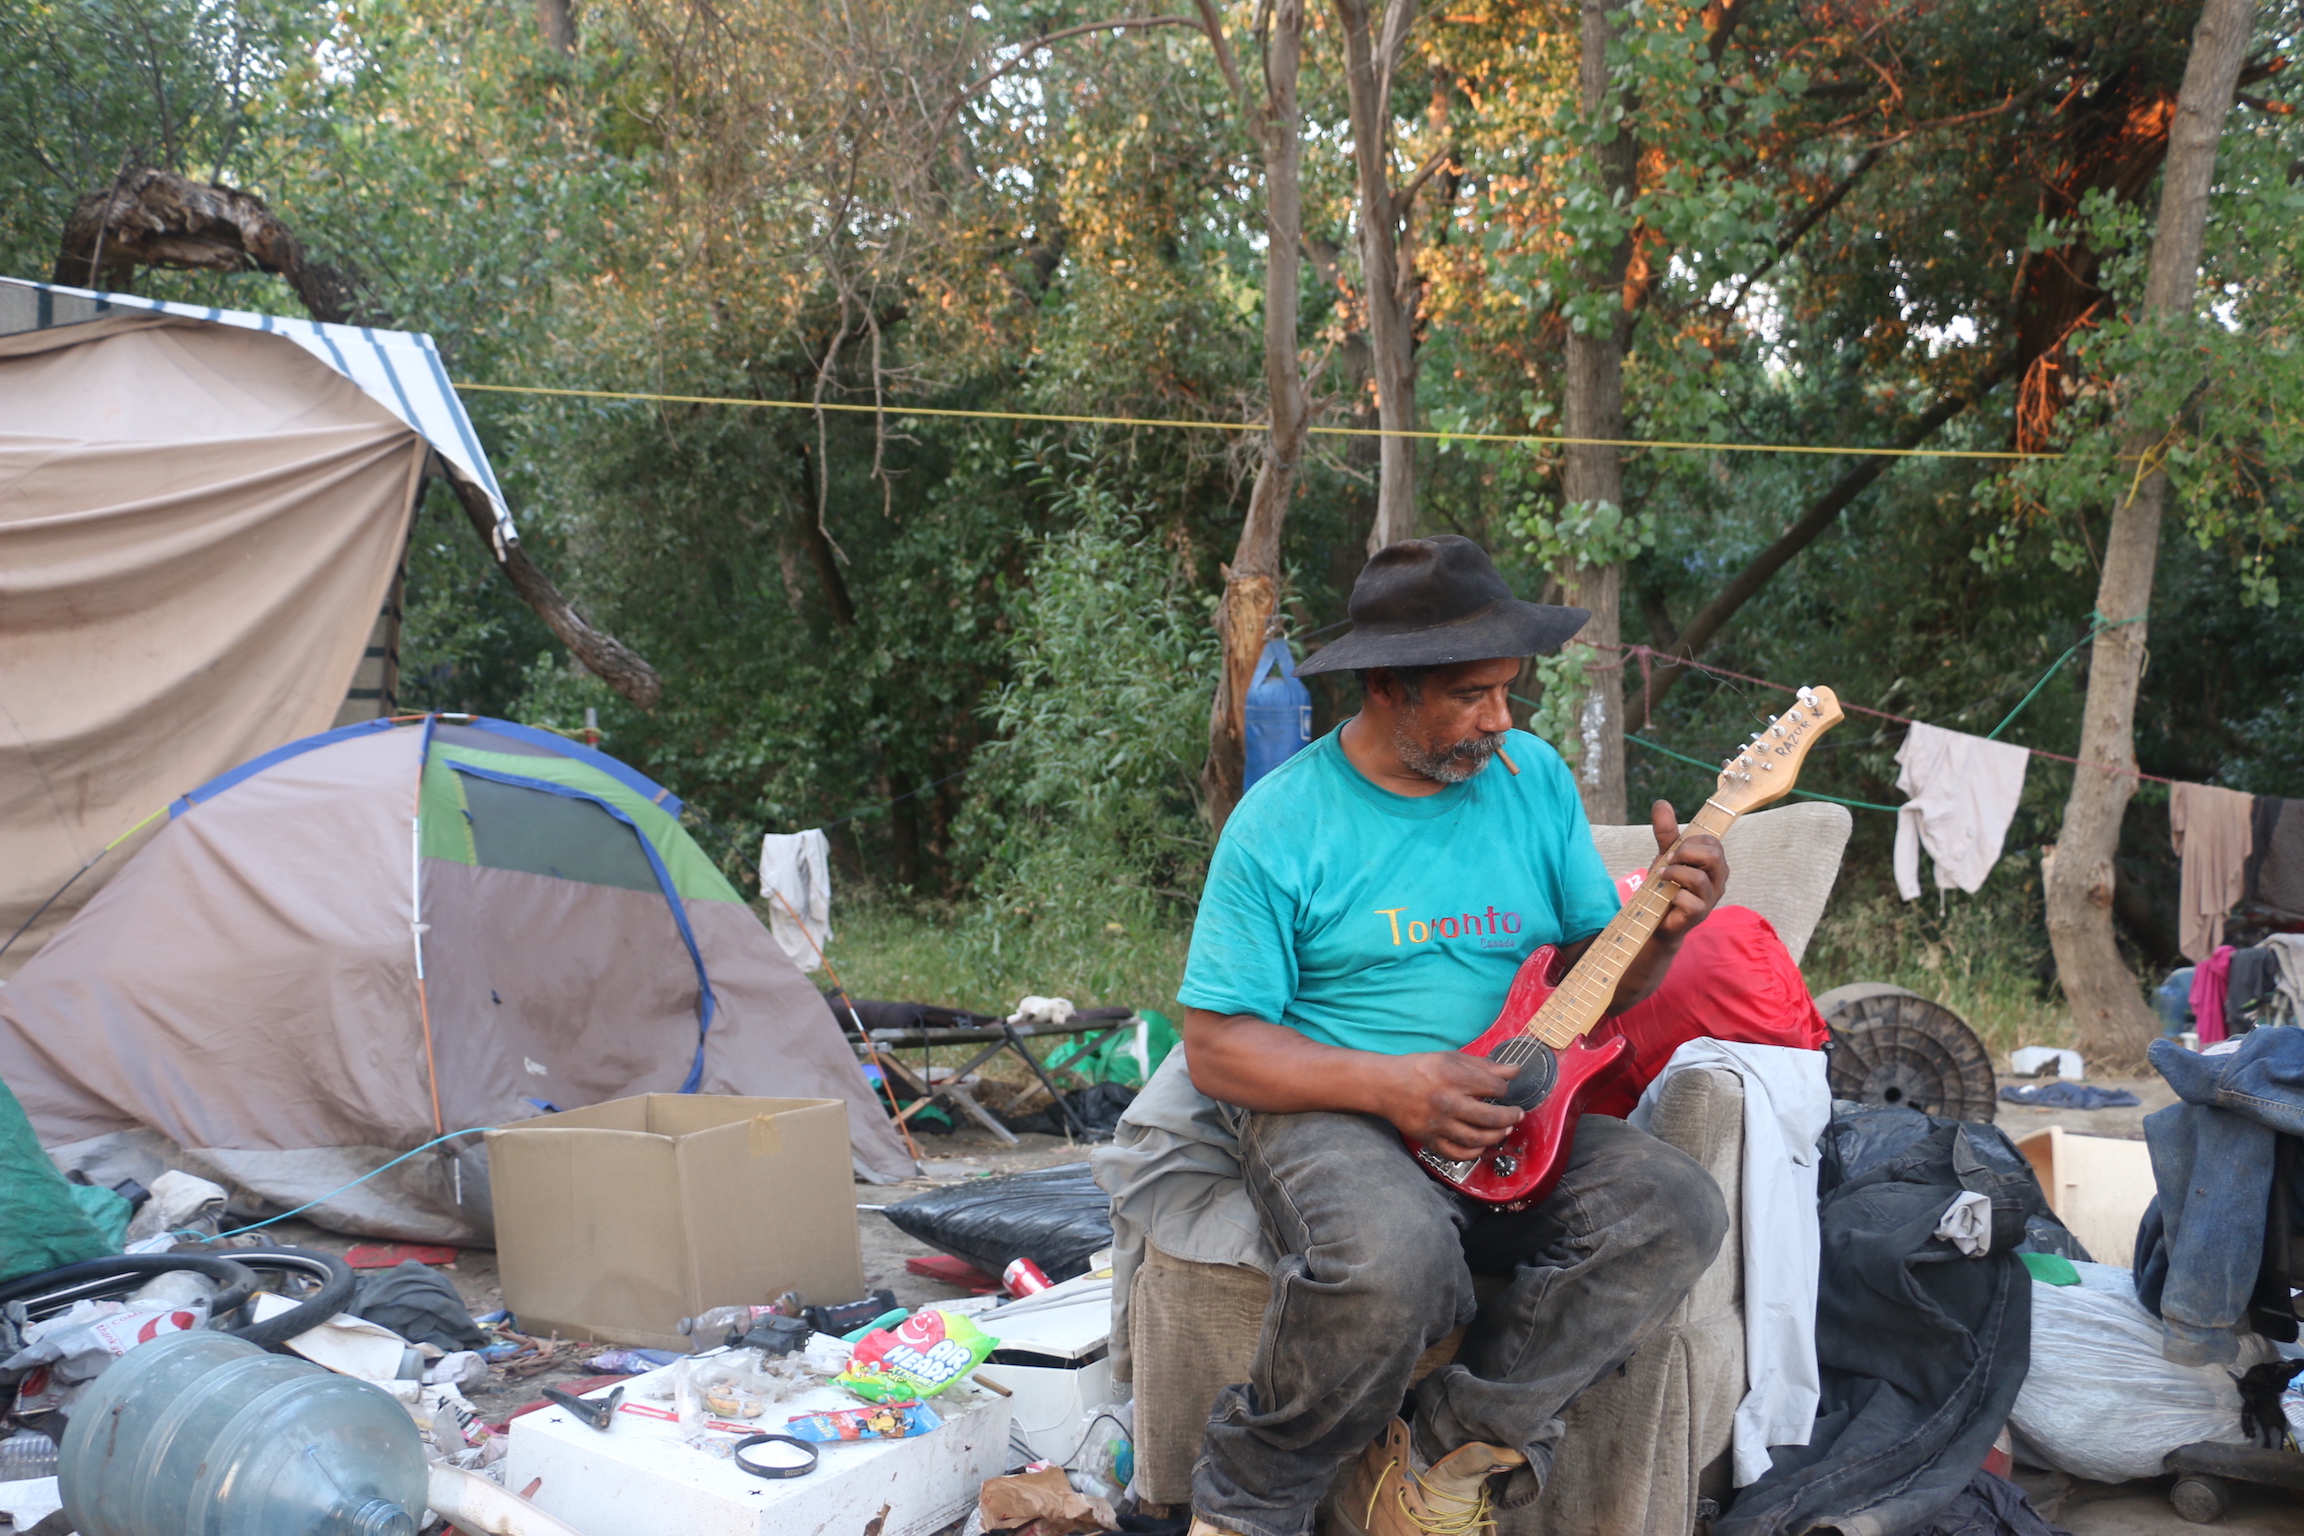 Jurassic Park homeless encampment in north San Jose, California